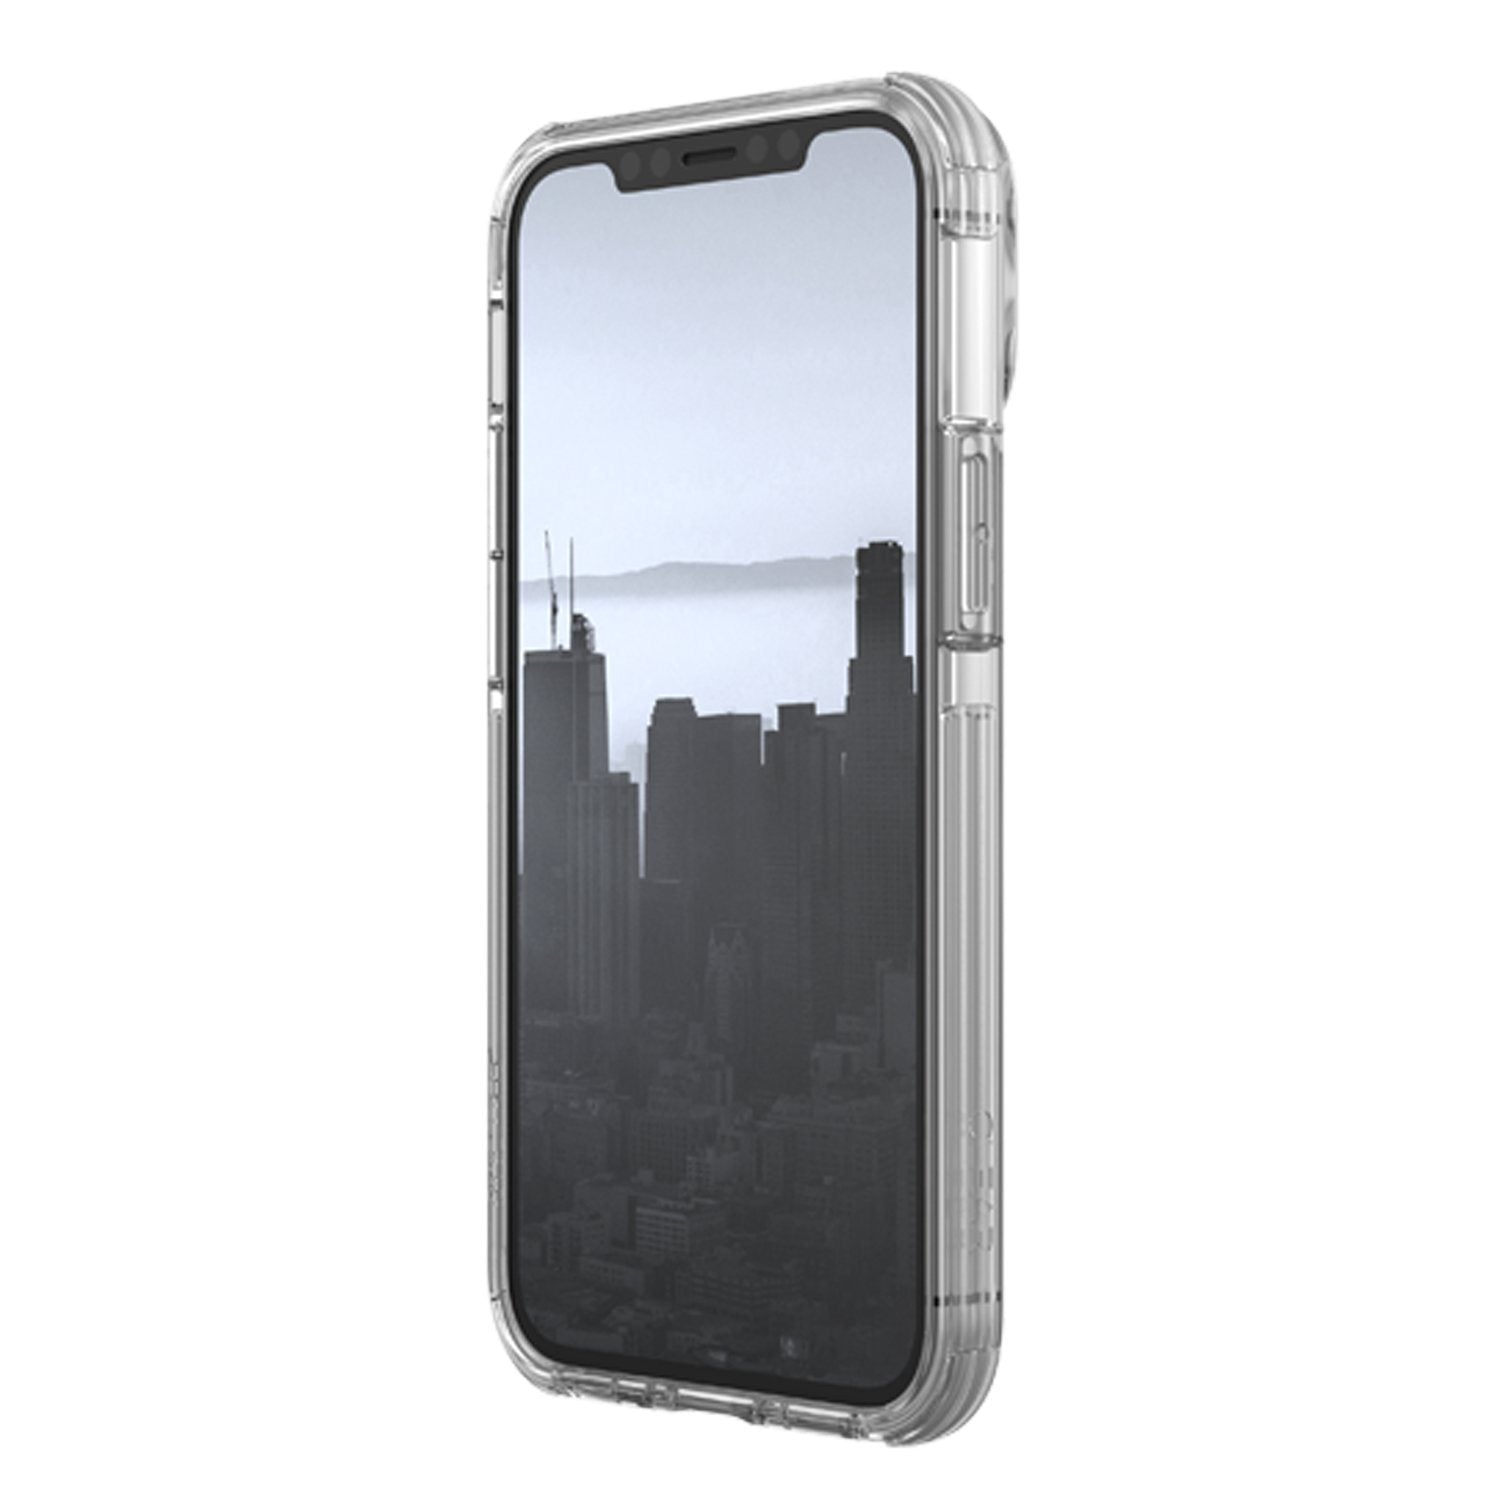 X-Doria Defense Raptic Clear Case for iPhone 12 mini 5.4"(2020), White Default X-Doria 